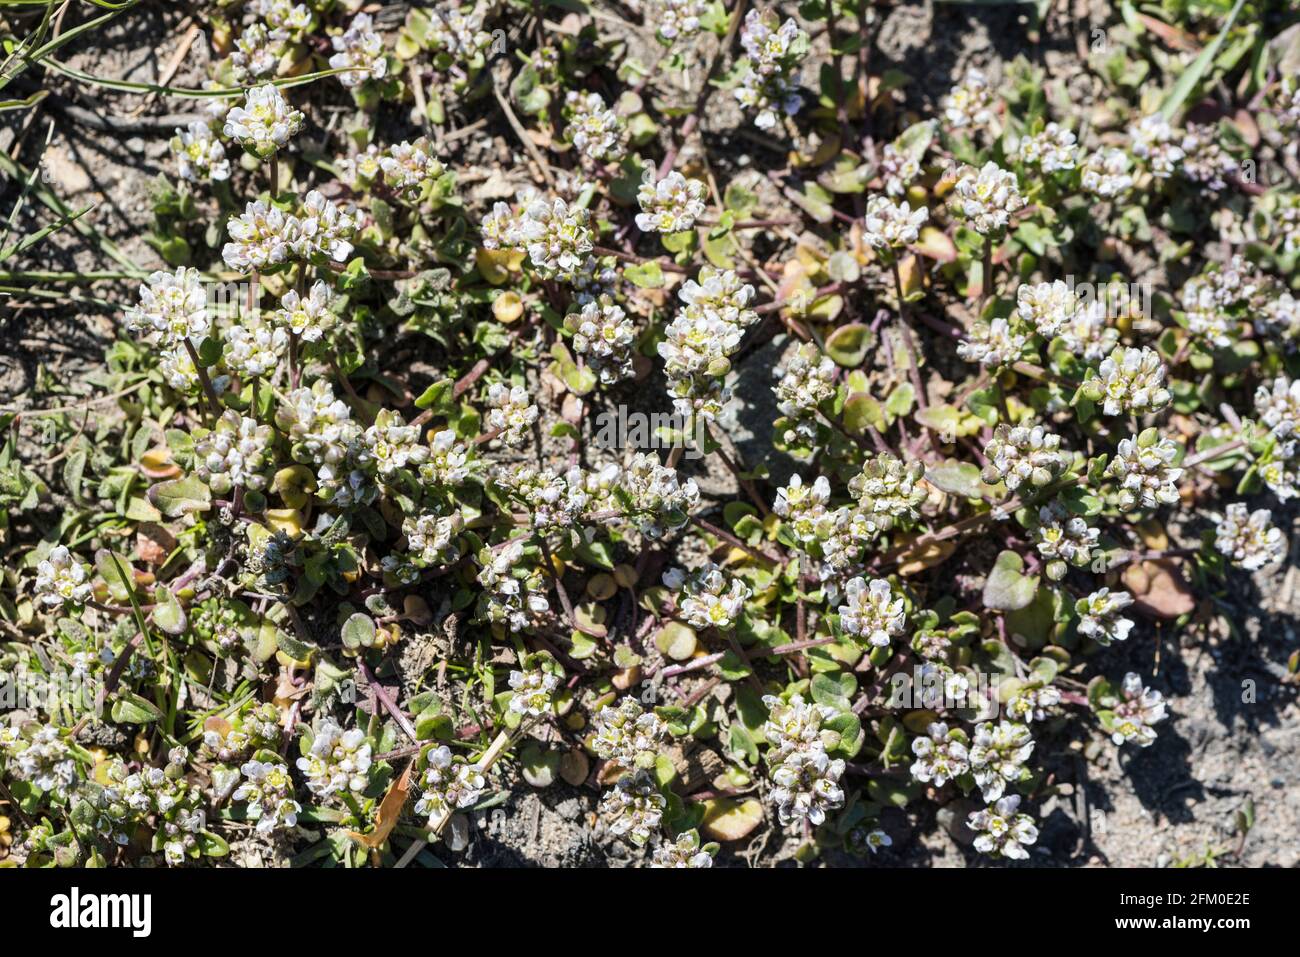 Kerb side growth of Danish Scurvygrass (Cochlearia danica) Stock Photo